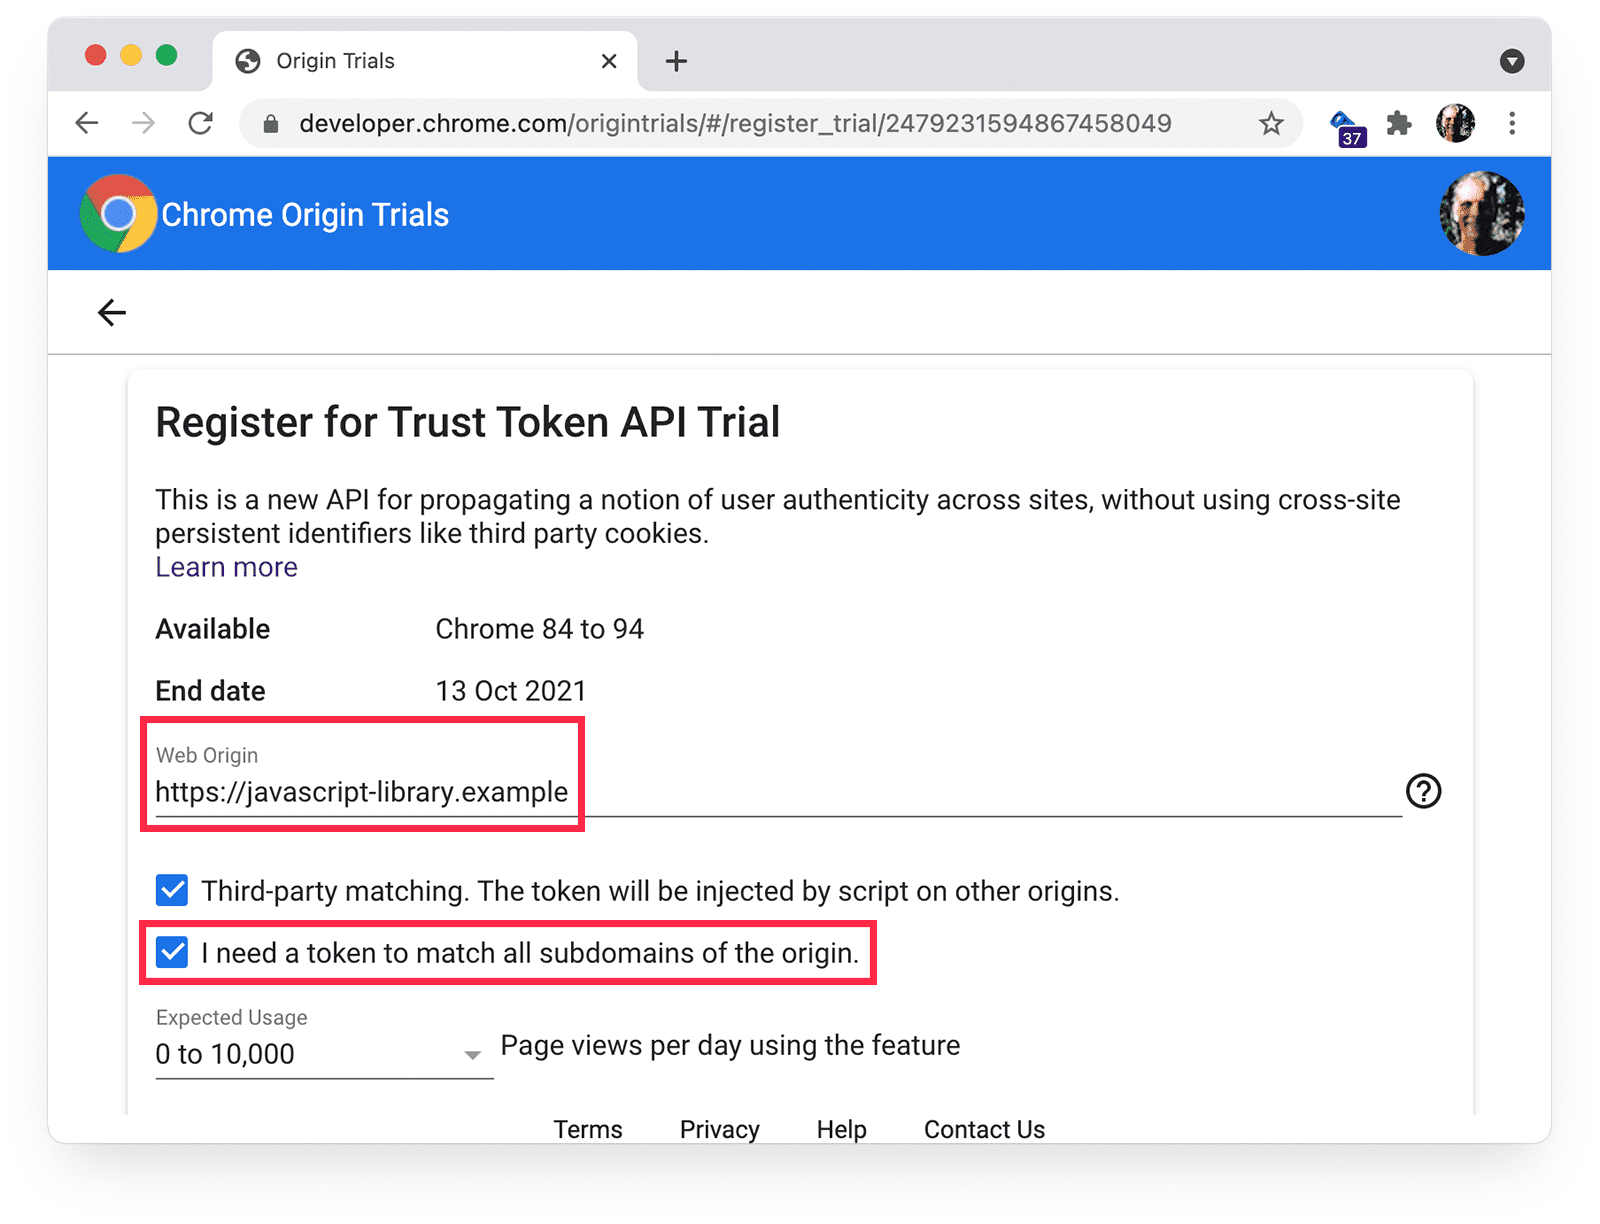 Chrome 源试用 
显示已选中第三方匹配和子域名匹配的注册页面